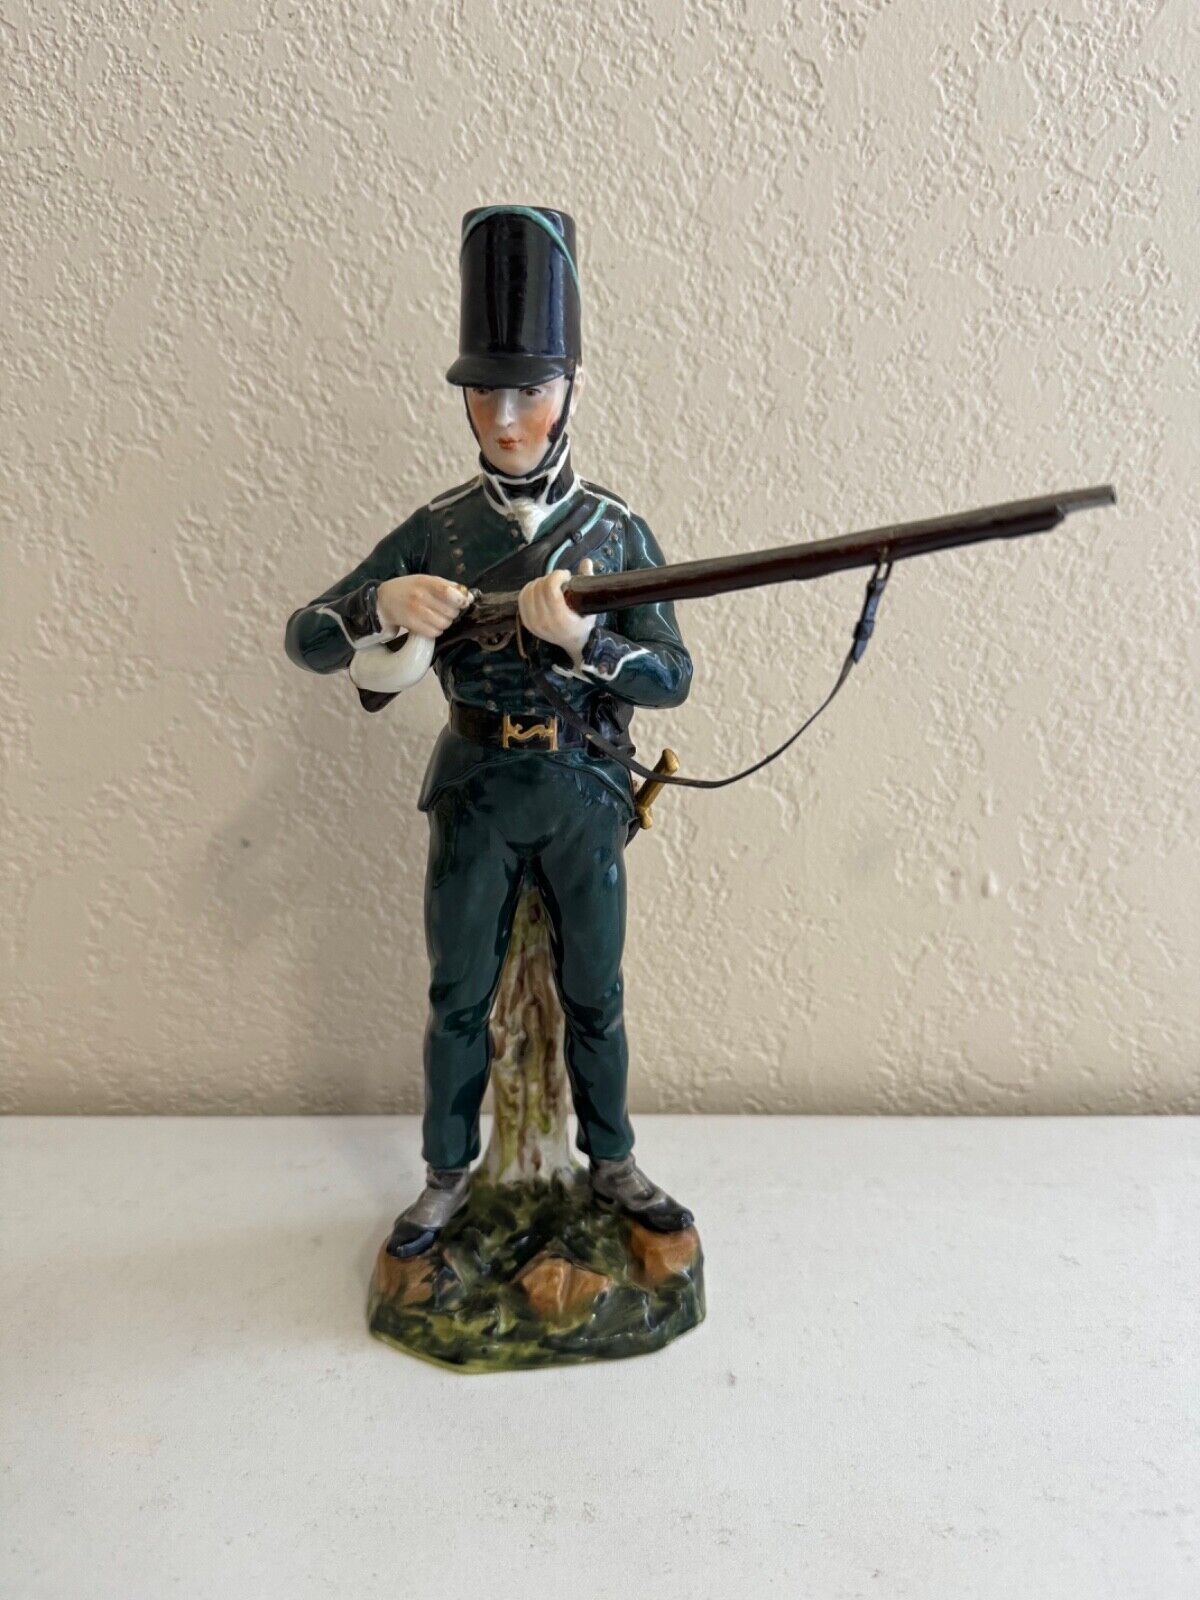 Antique Porcelain Military Figurine 1815 95th Rifleman Brigade Made in Dresden